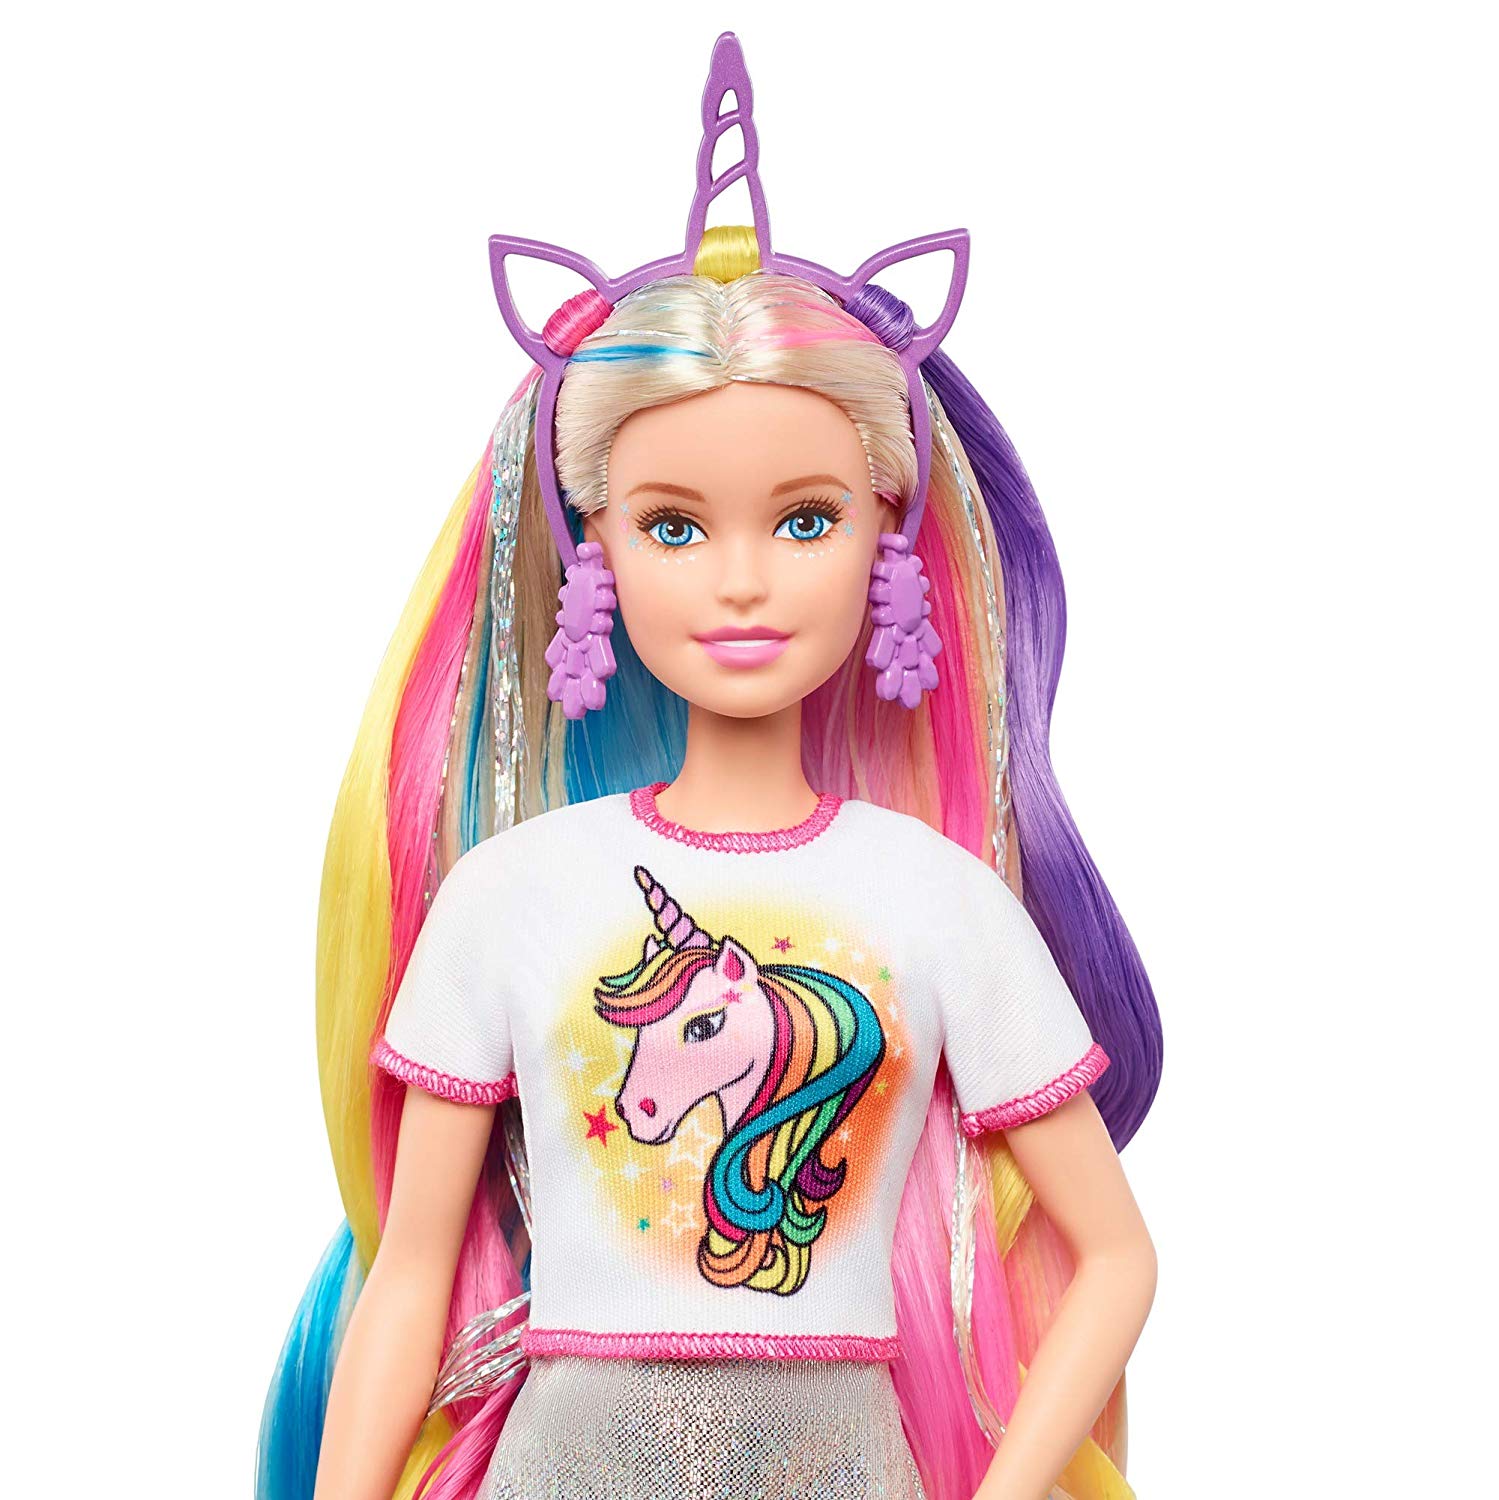 barbie unicorn hair